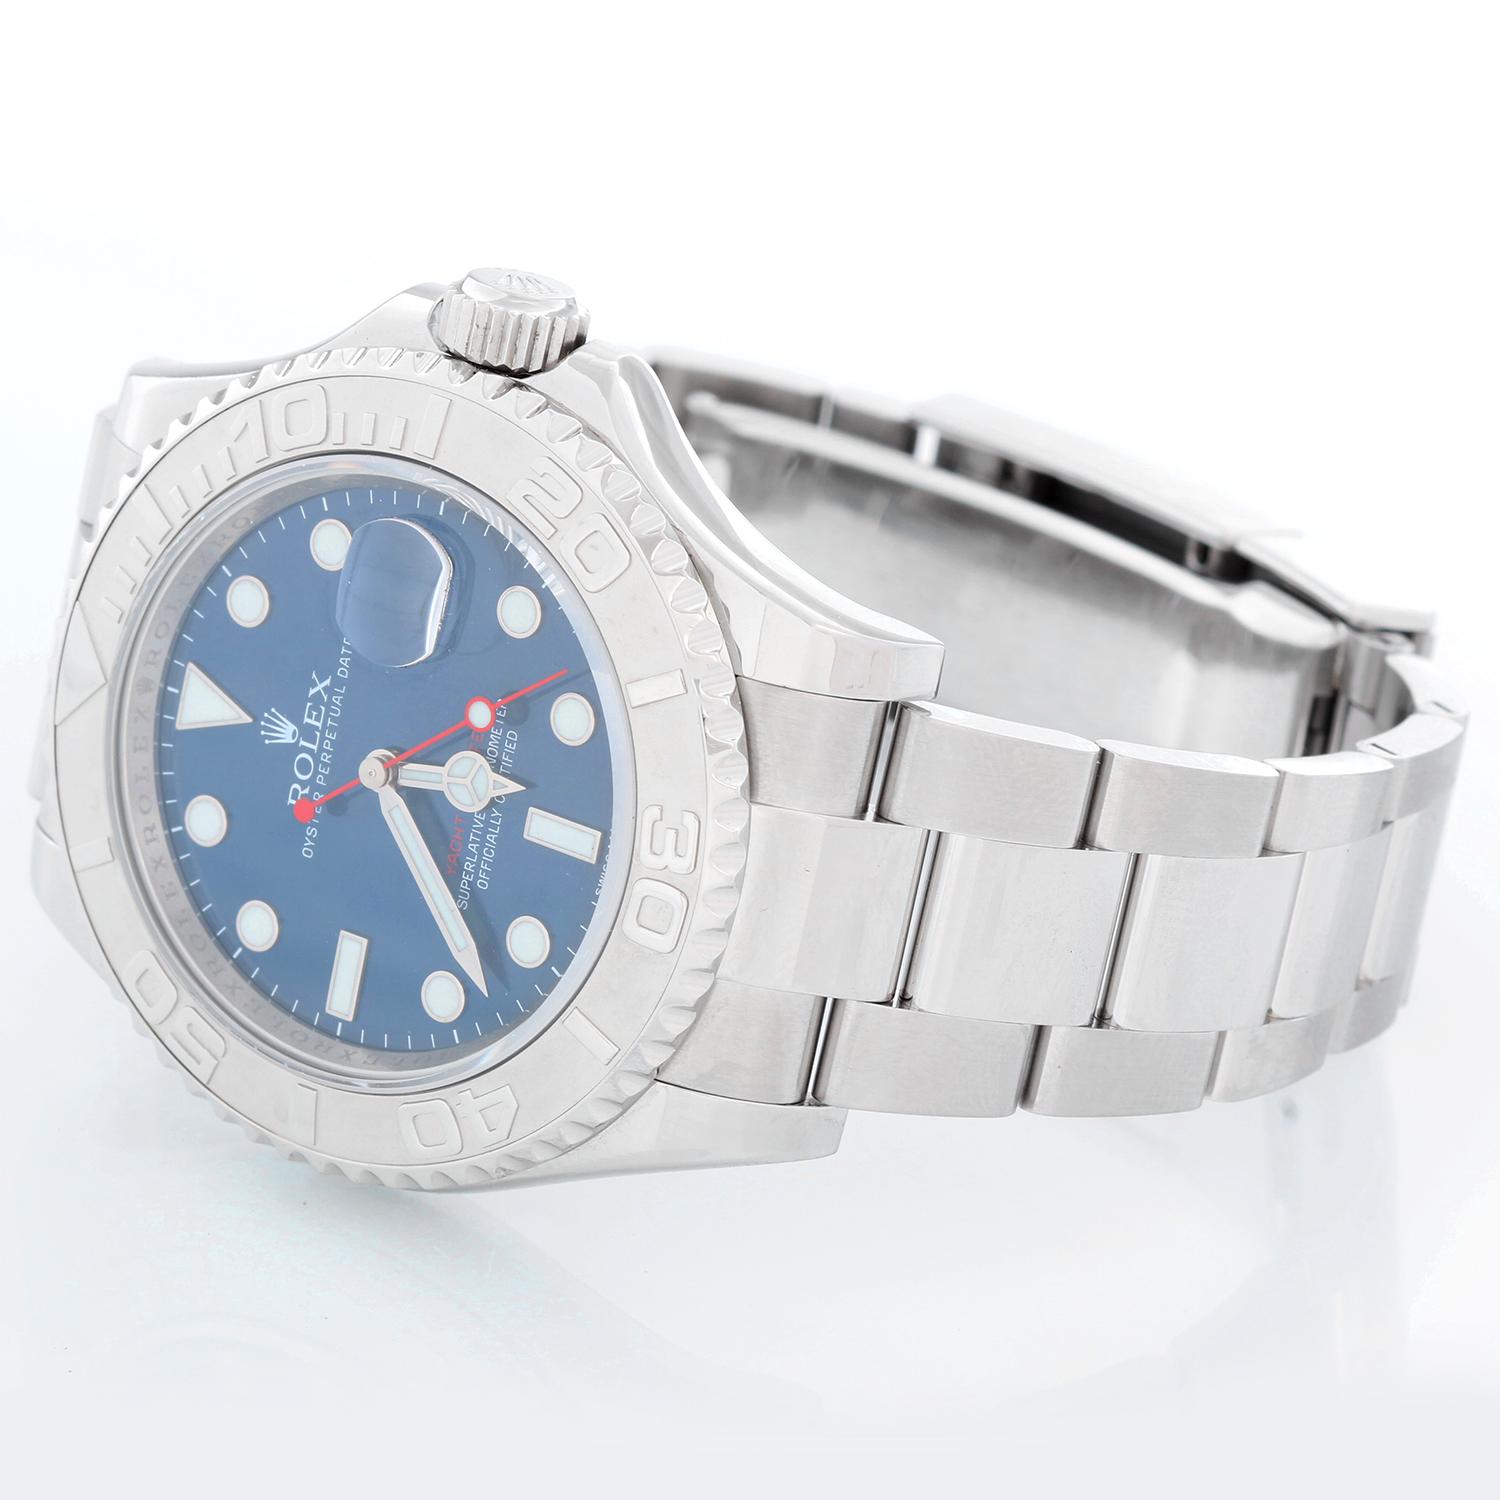 Men's Rolex Stainless Steel Yacht-Master Automatic Wristwatch Ref 116622